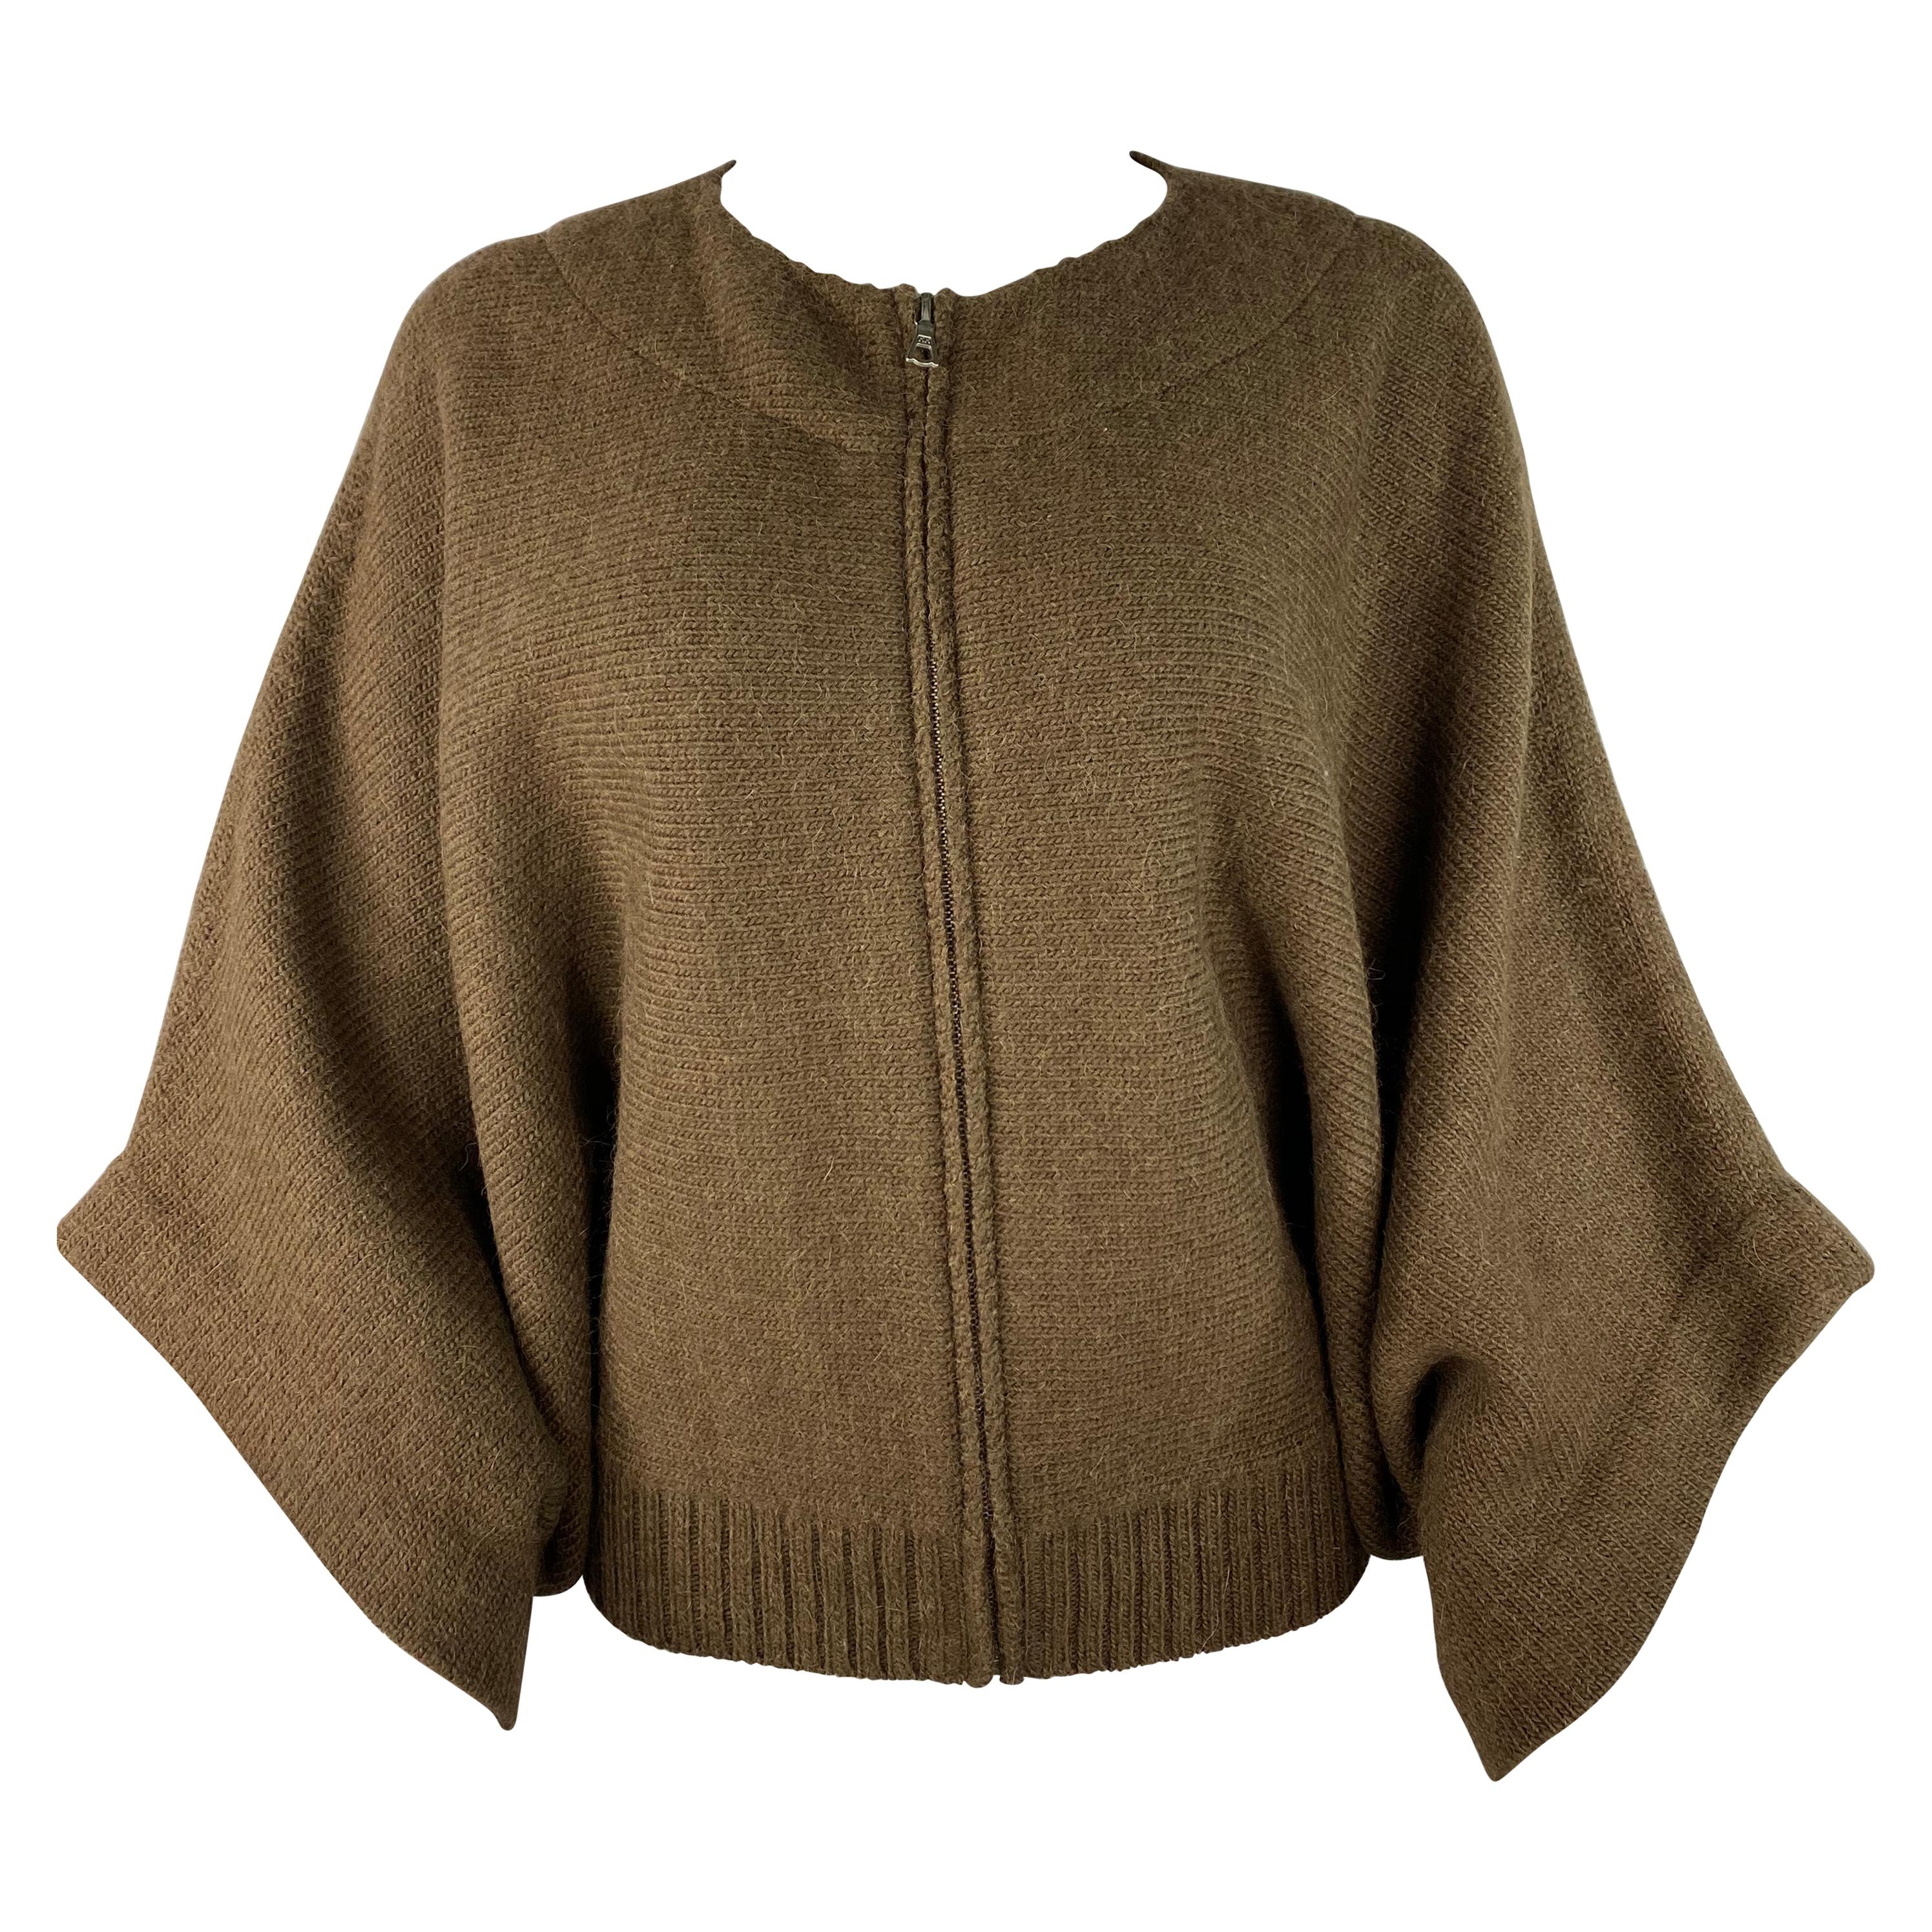 Dries Van Noten Brown Knit Sweater, Size Medium